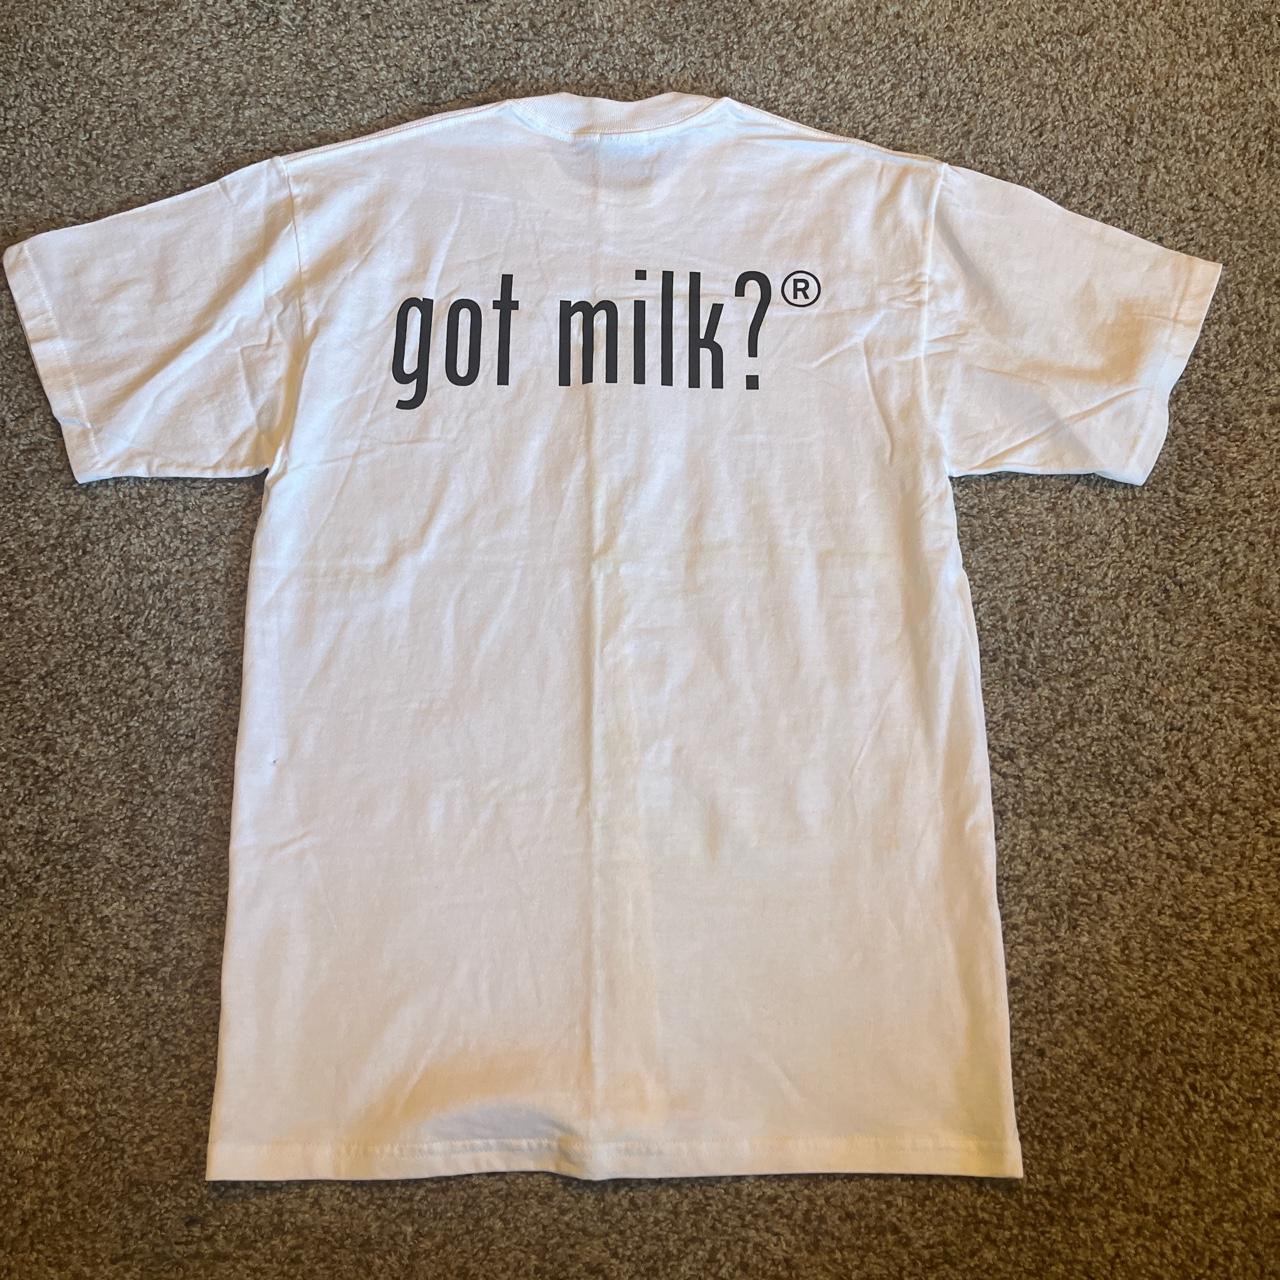 Got milk? - Depop